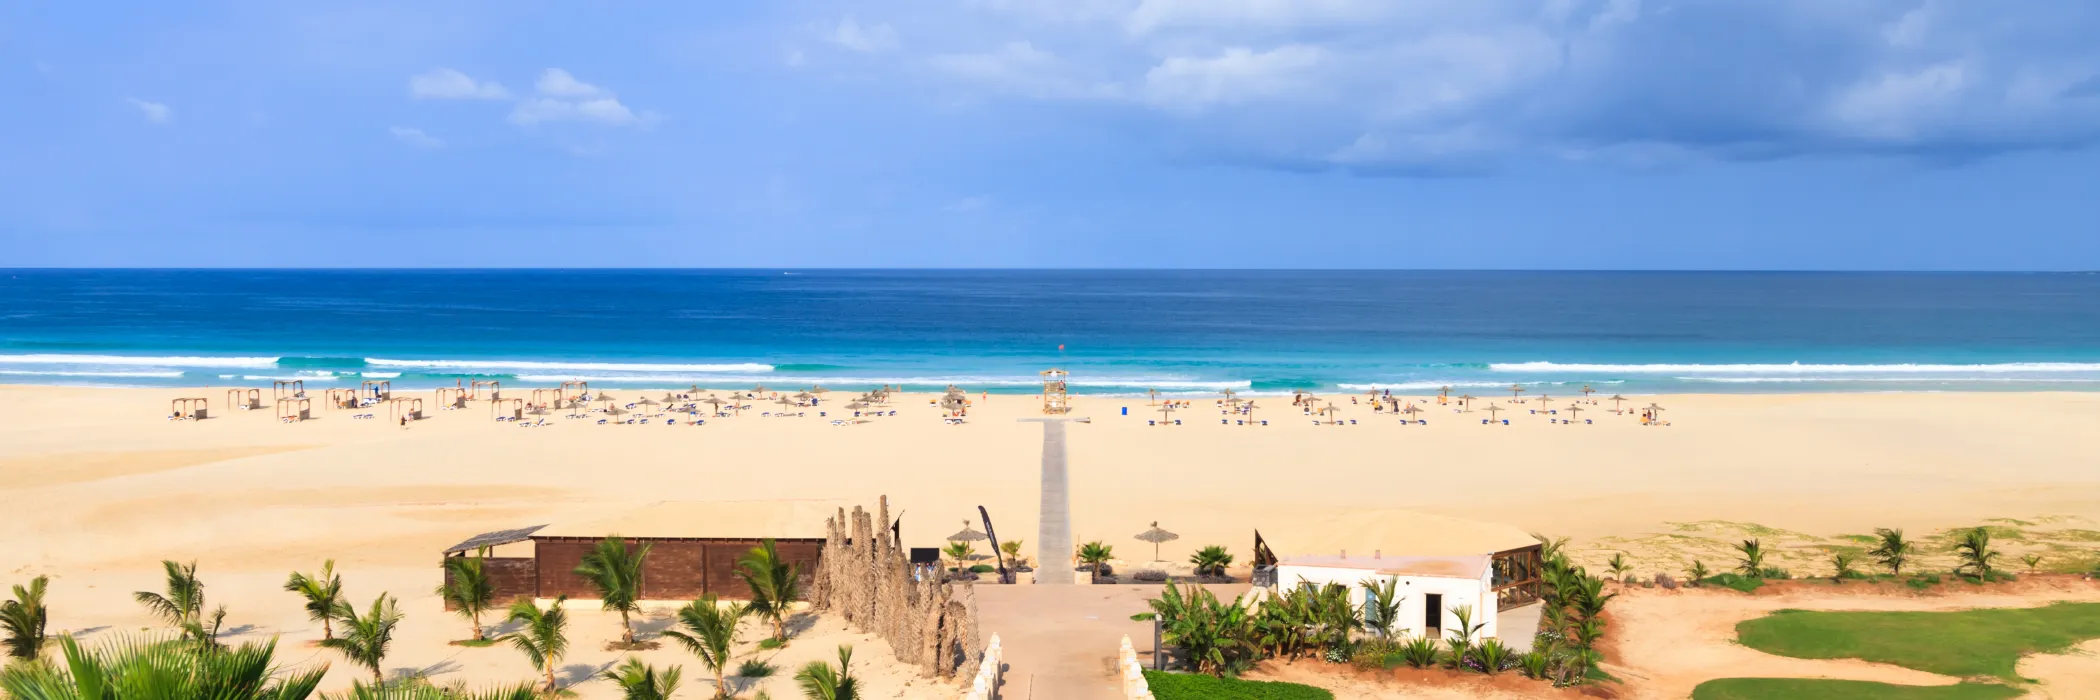 All Inclusive Cape Verde Holidays - Boa Vista Beach